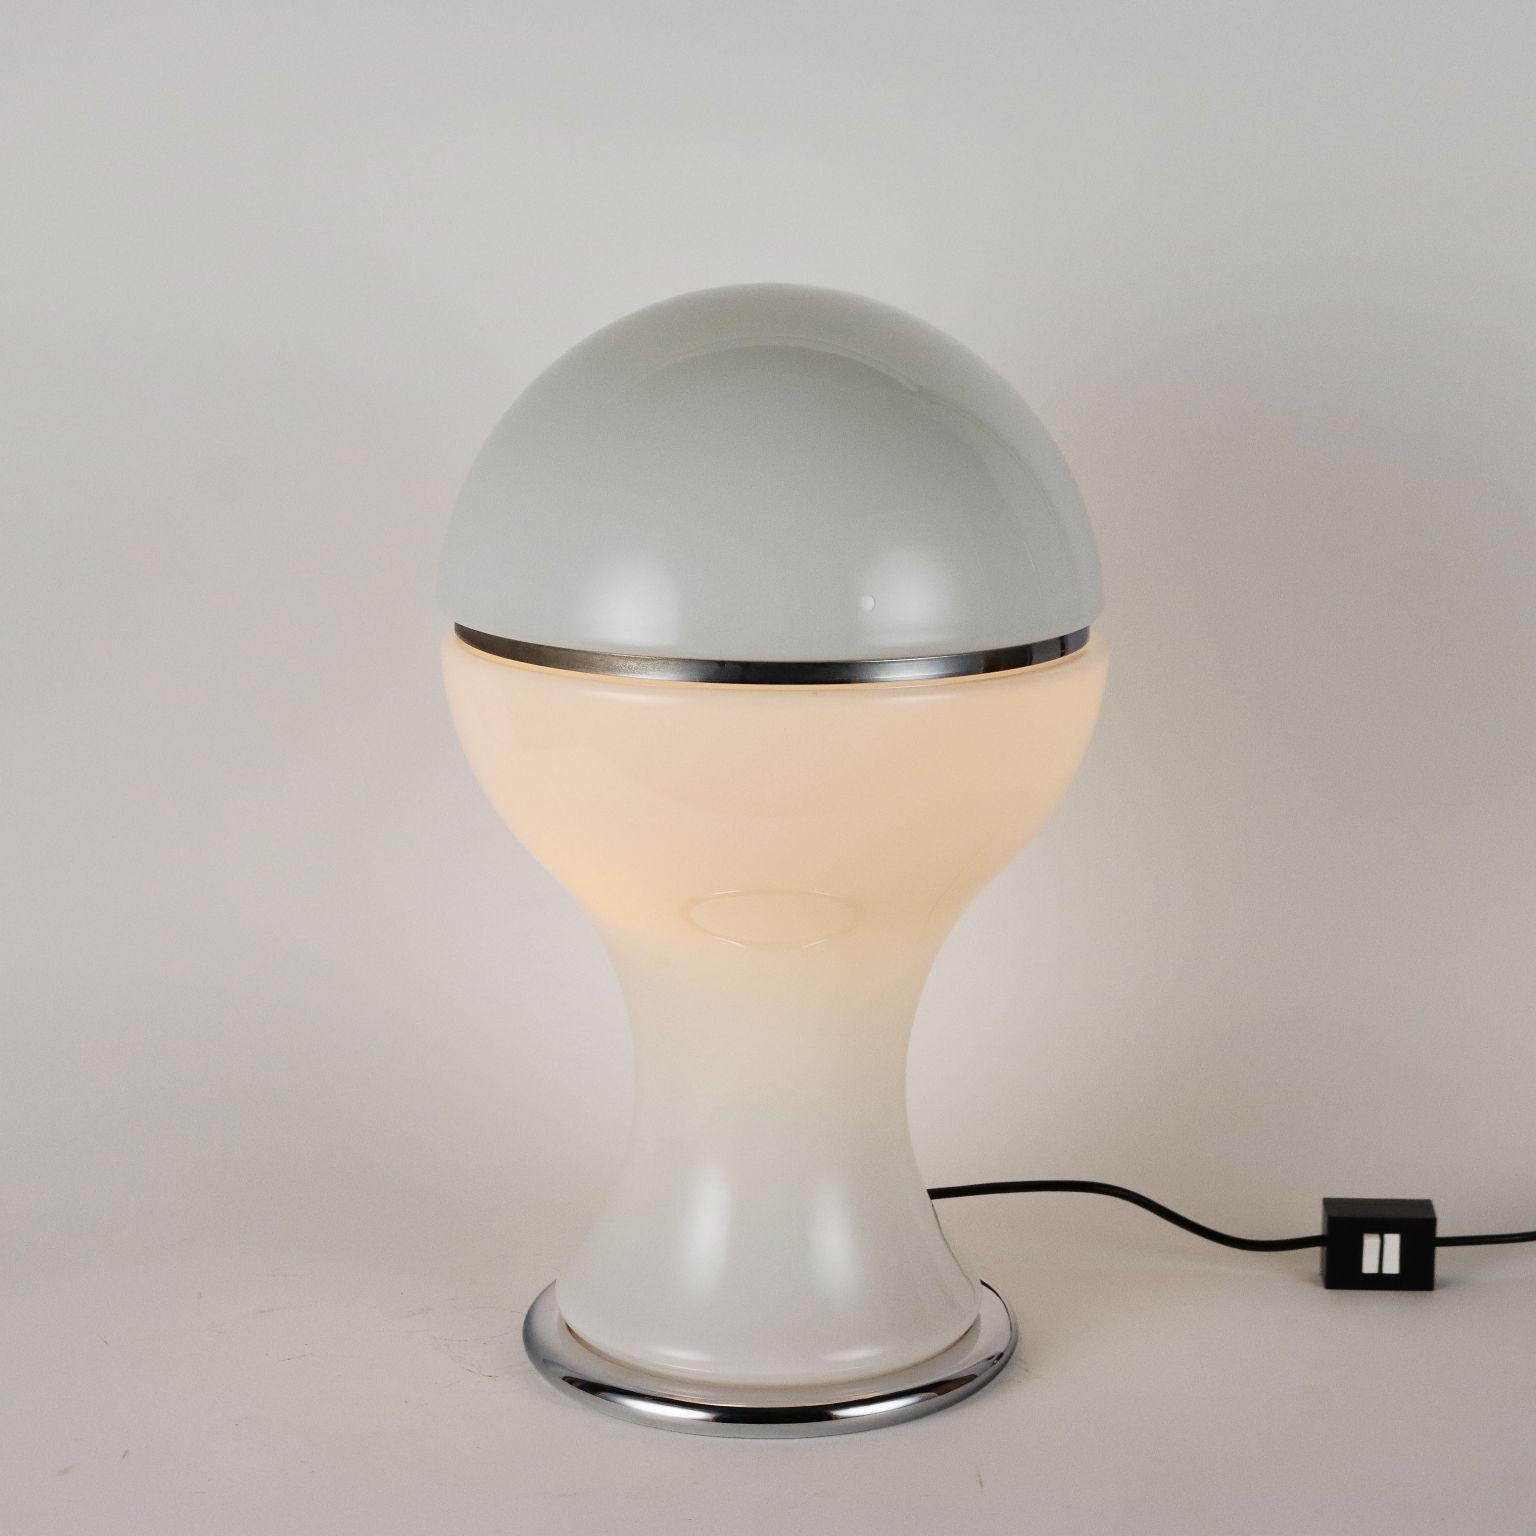 Italian Gianna Celada 'Mongolfiera' Lamp for Fontana Arte, 1960s-70s